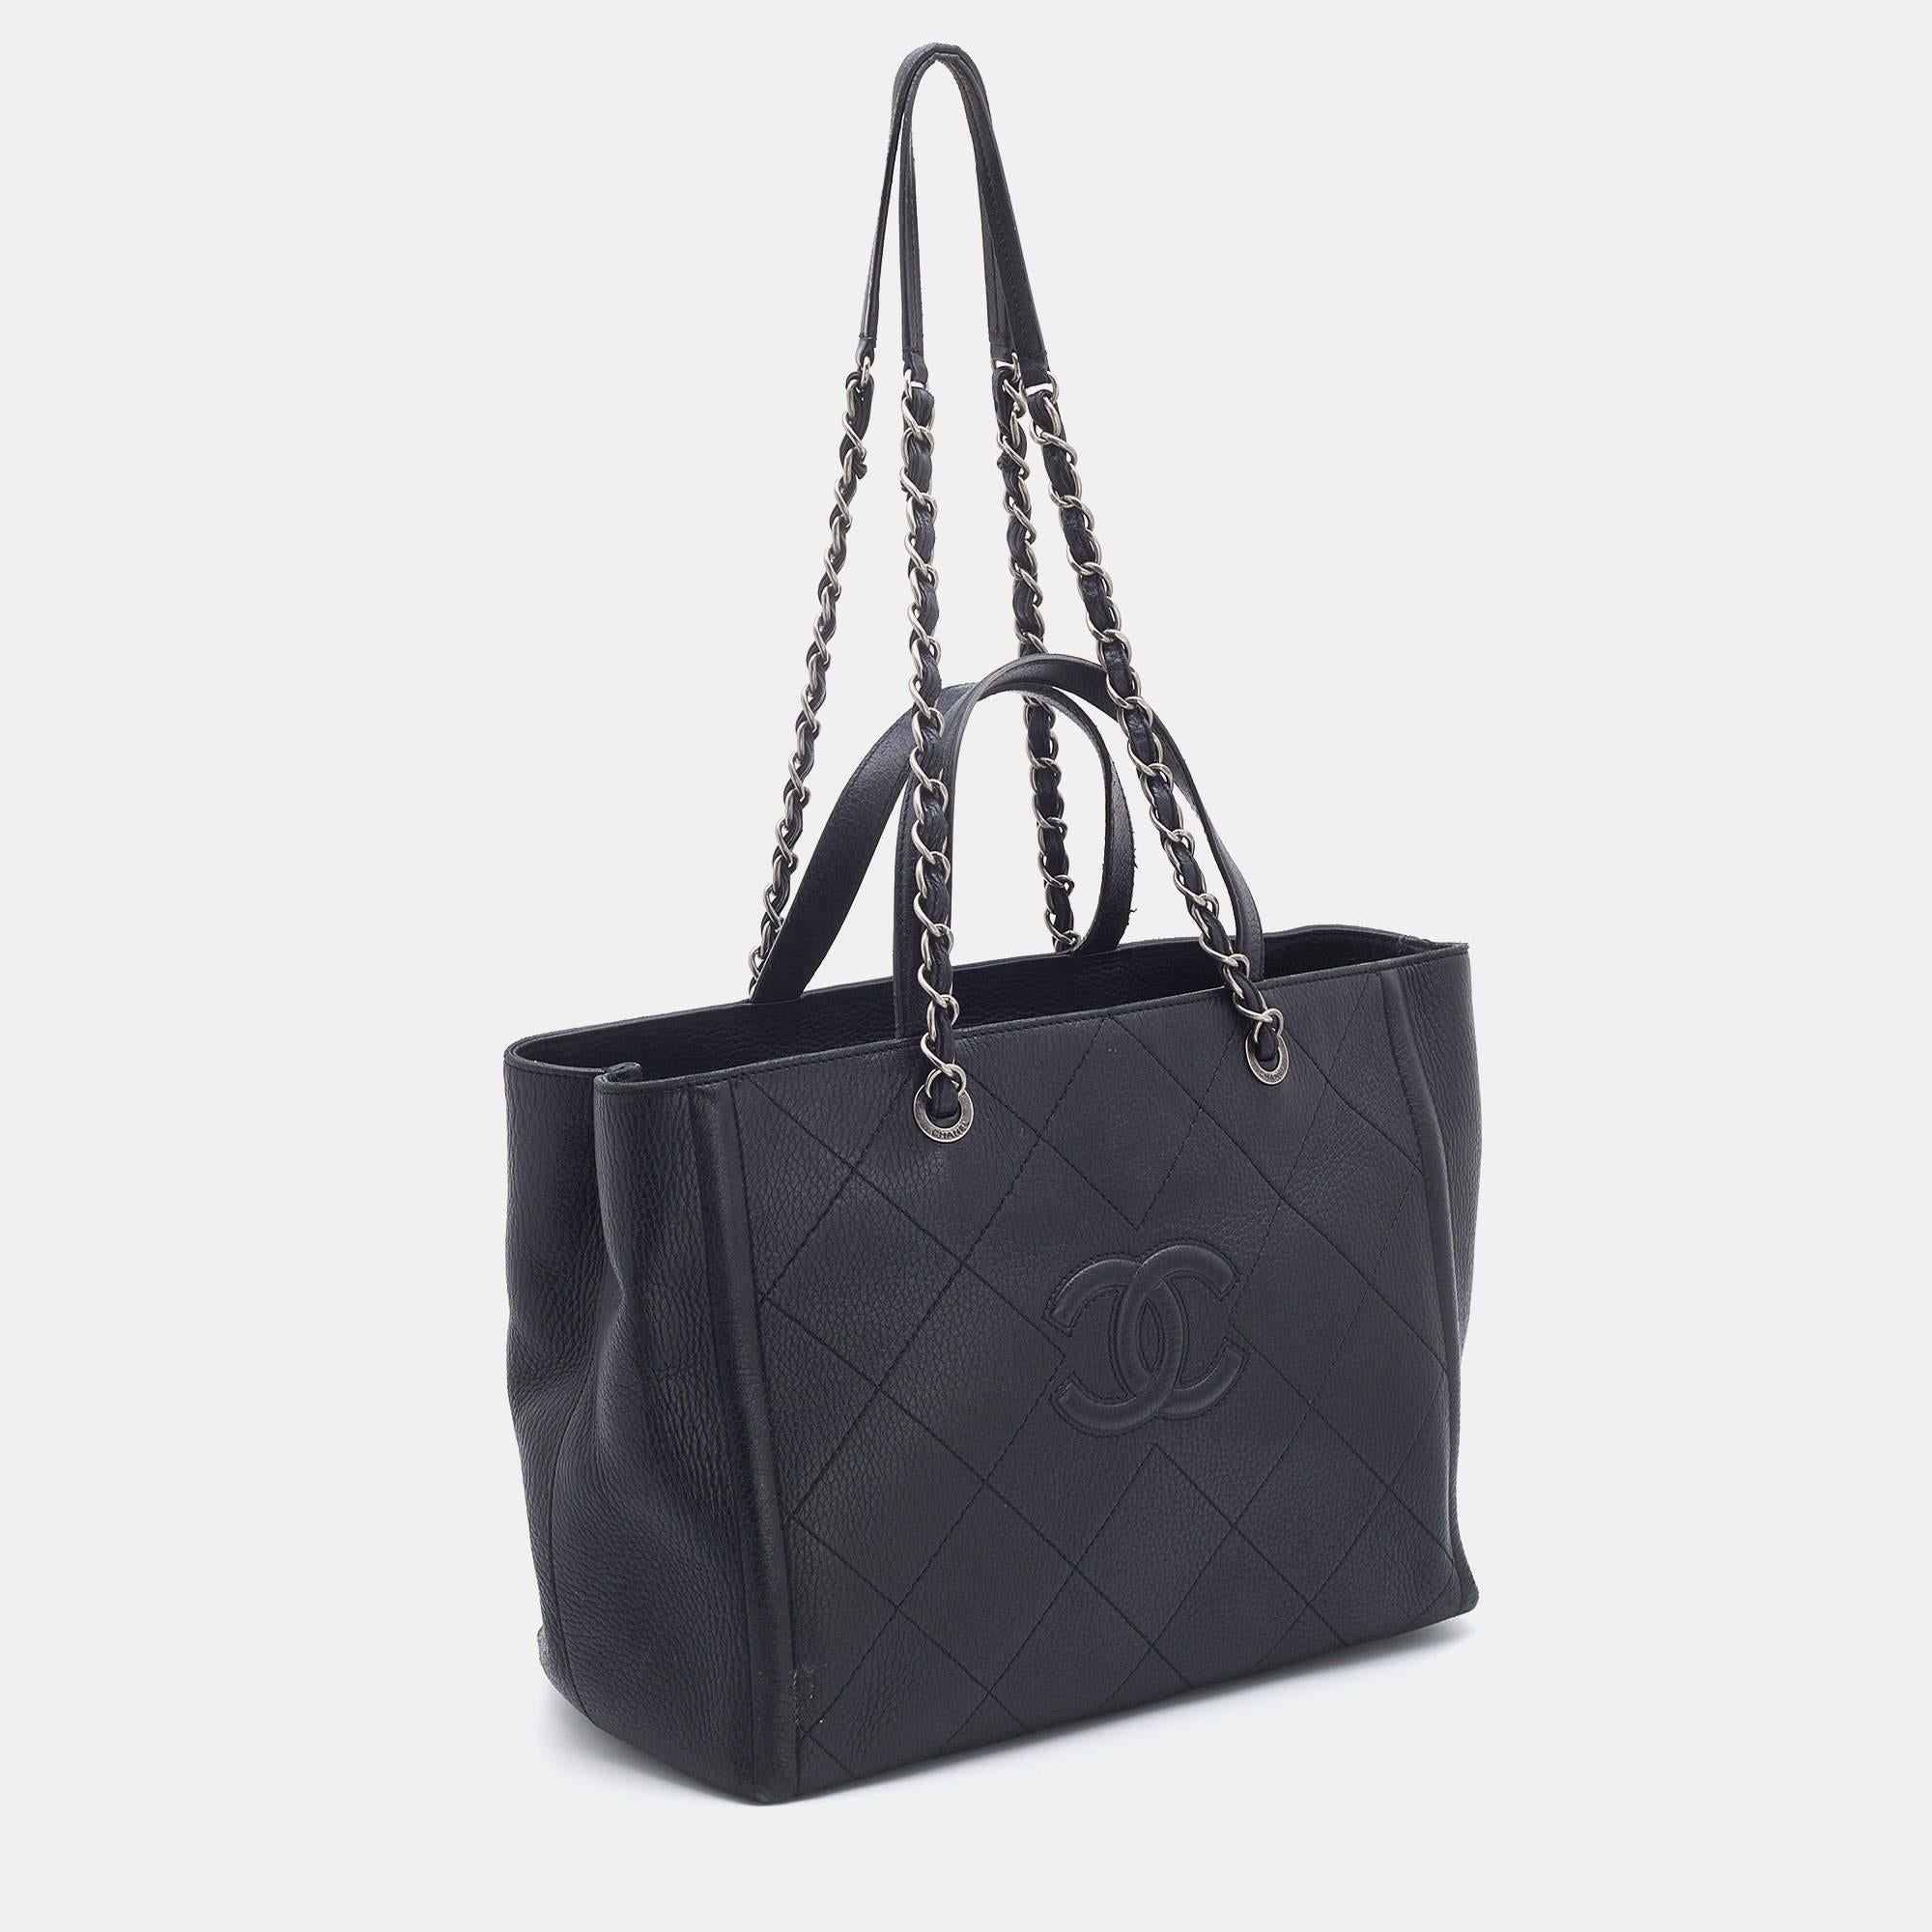 Chanel Black Quilted Leather Medium CC Shopper Tote In Fair Condition In Dubai, Al Qouz 2